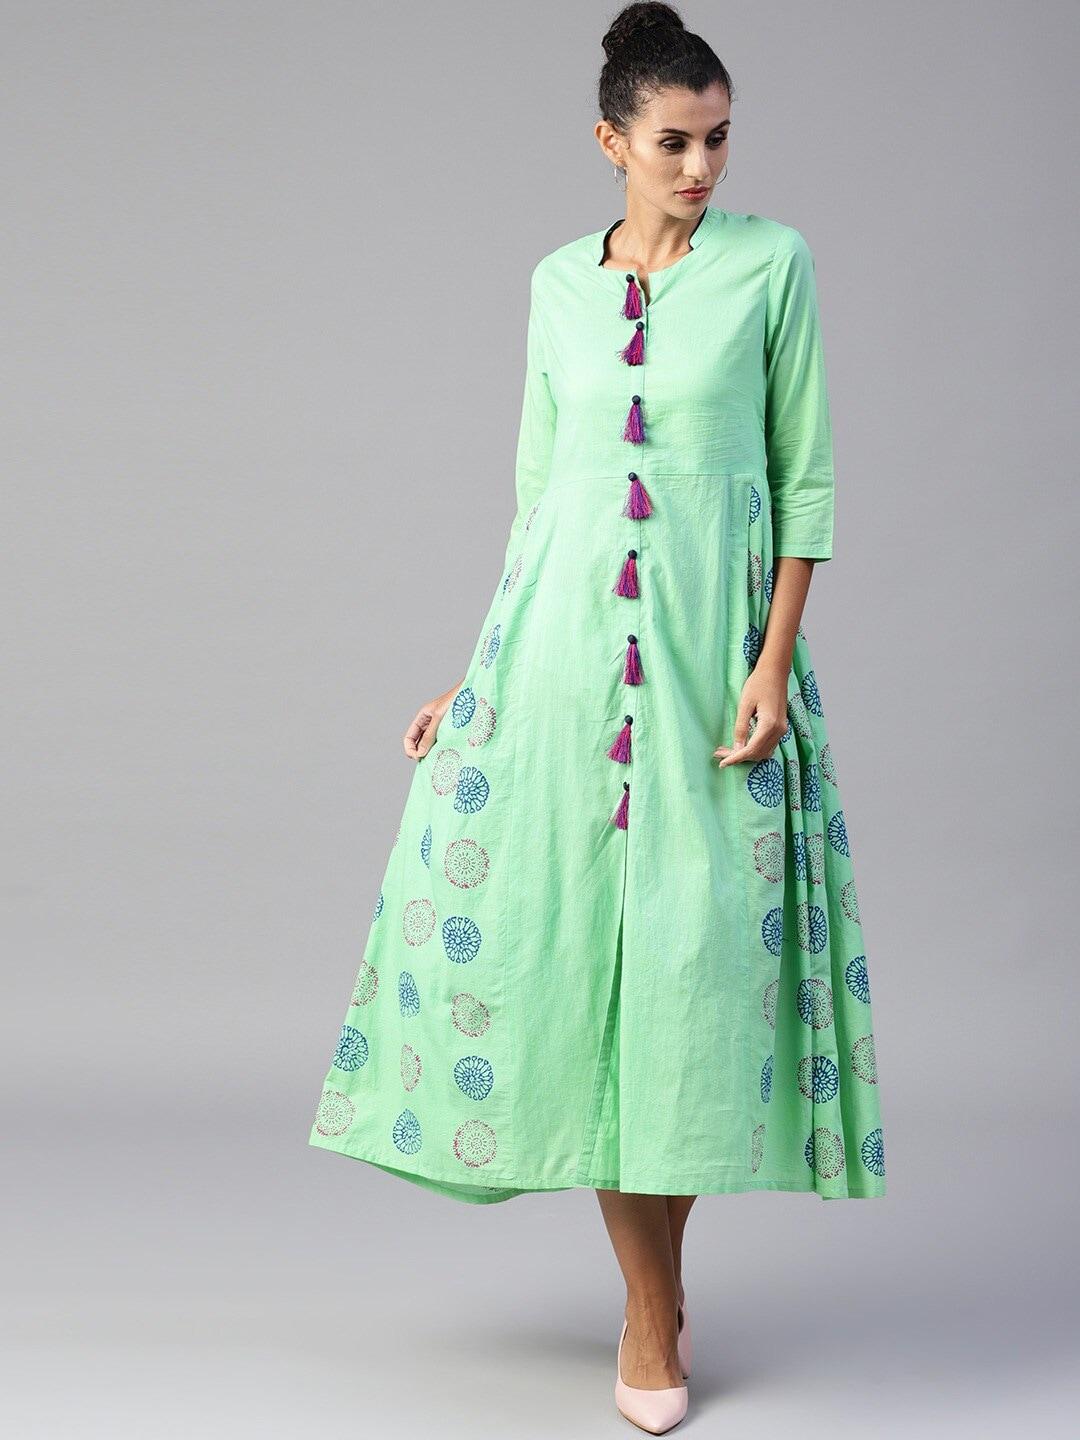 tulsattva-green-ethnic-motifs-a-line-cotton-dress